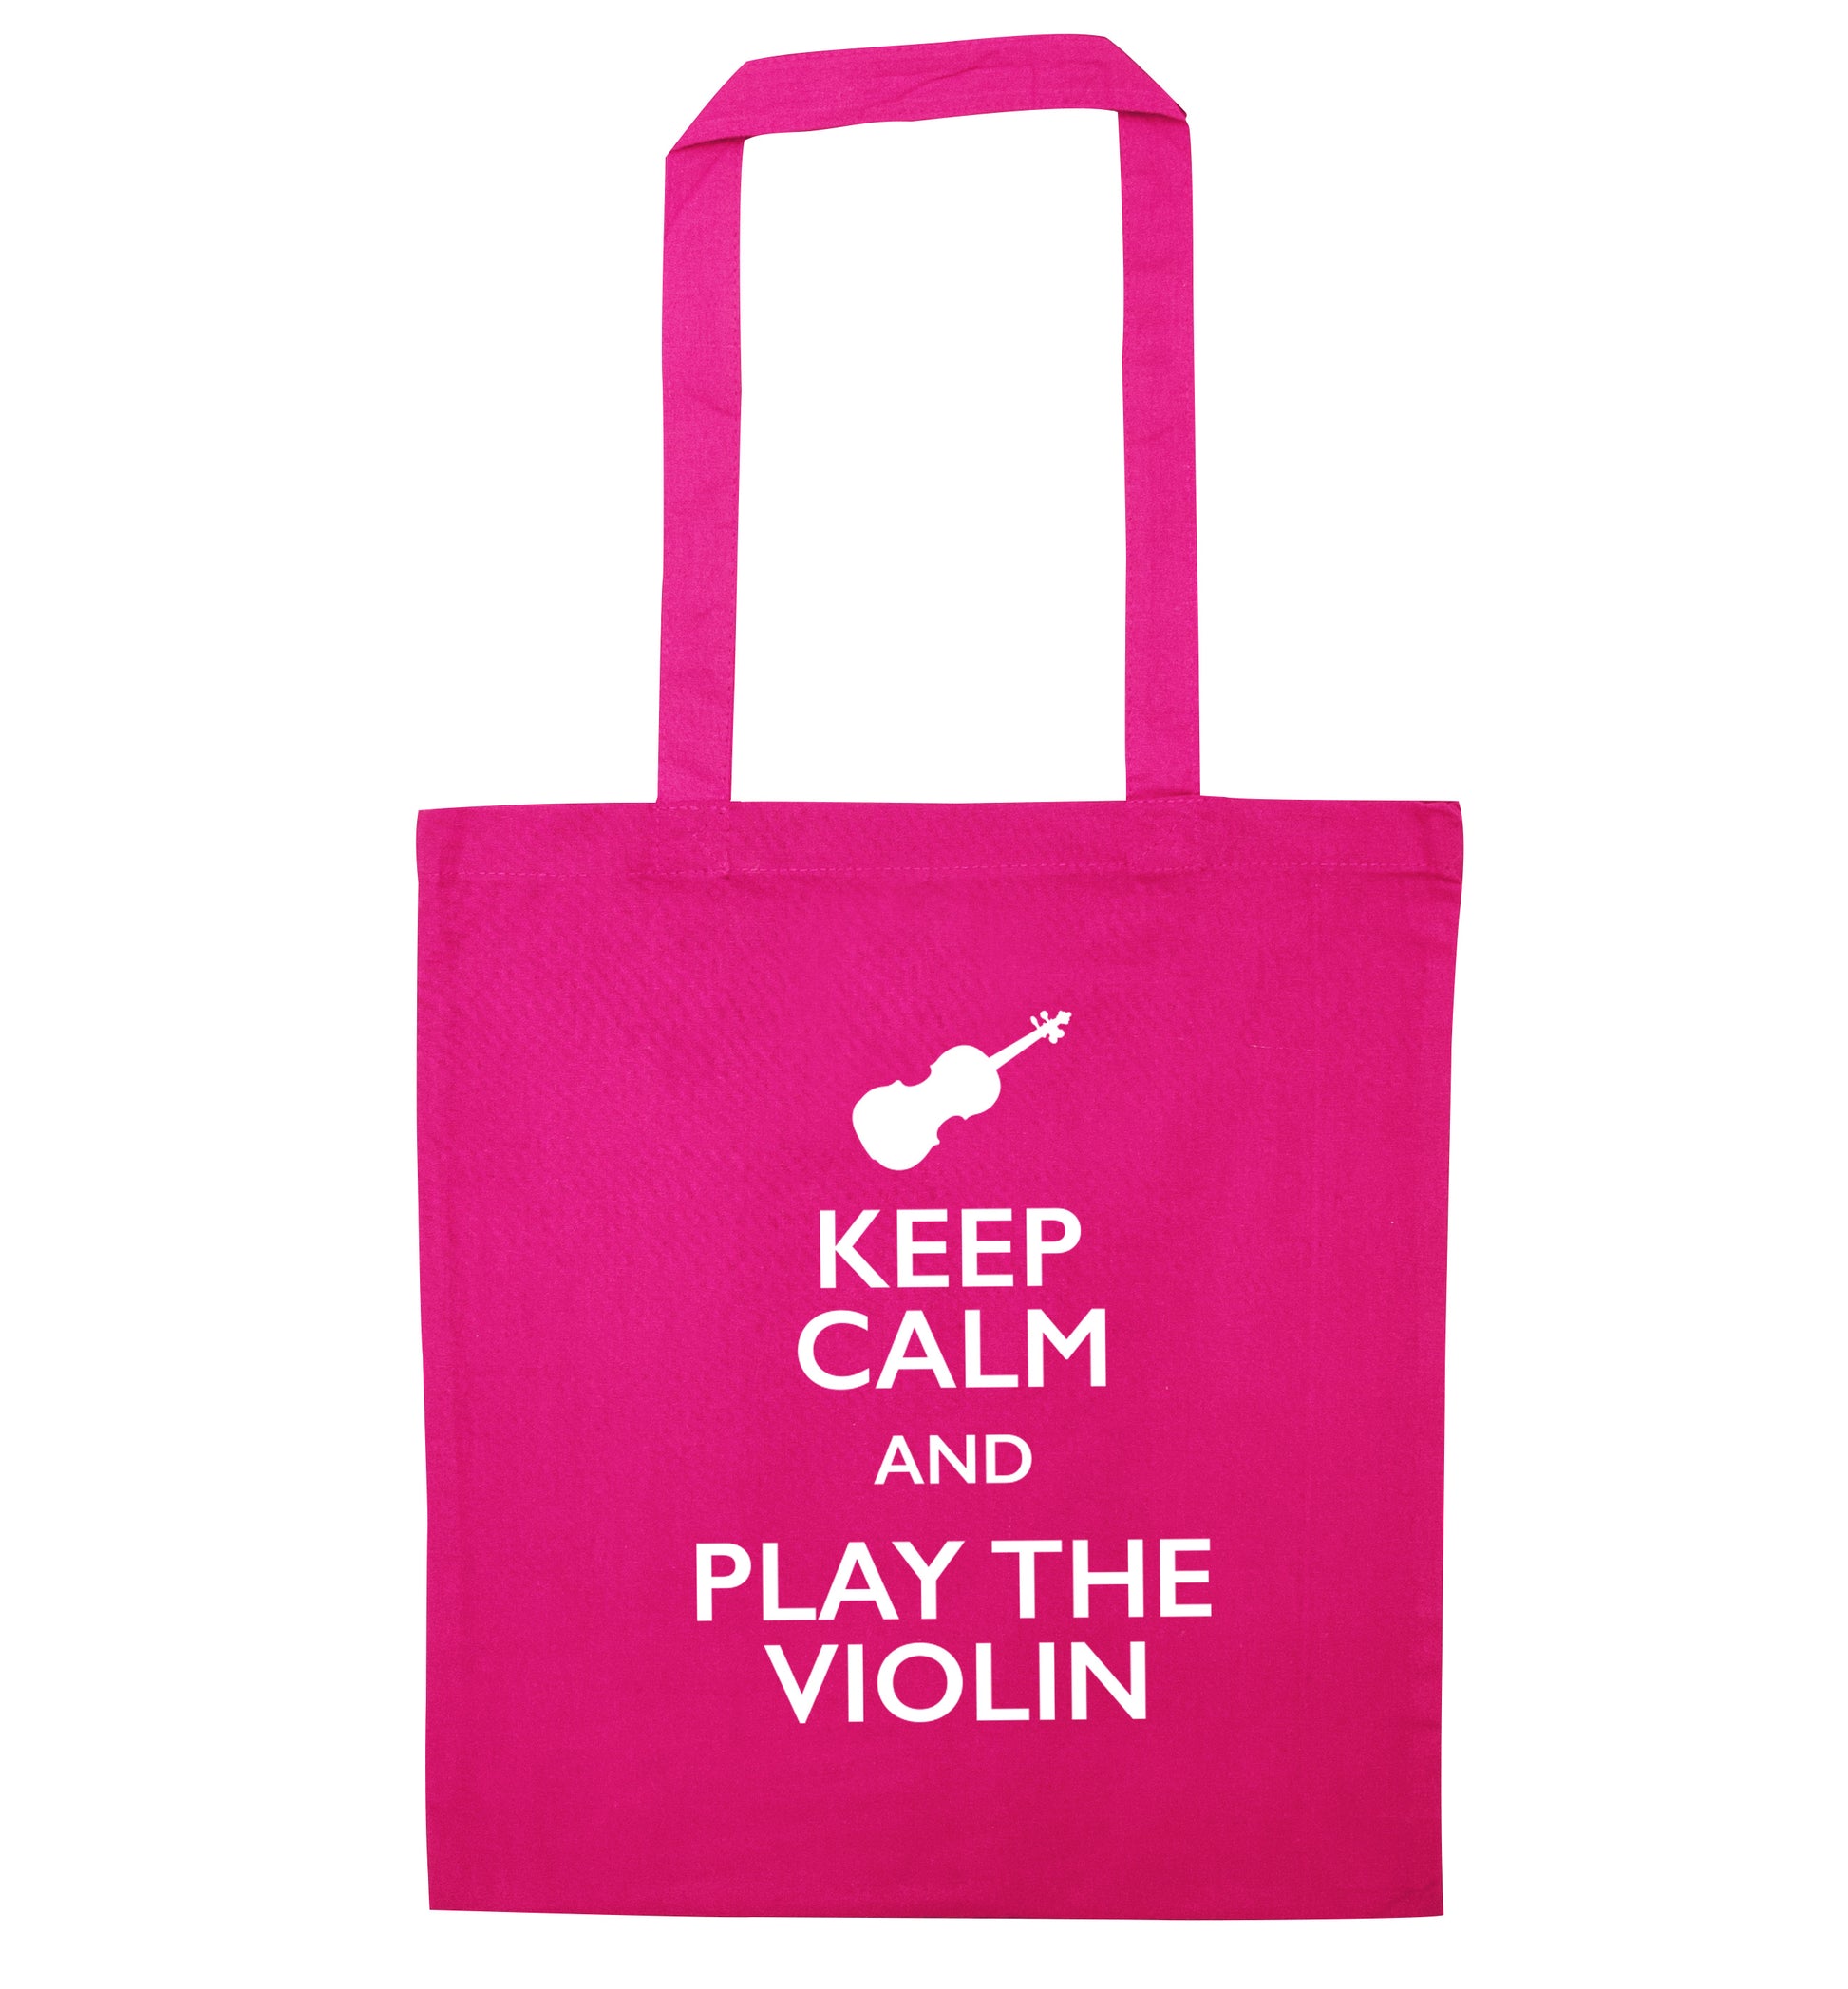 Keep calm and play the violin pink tote bag